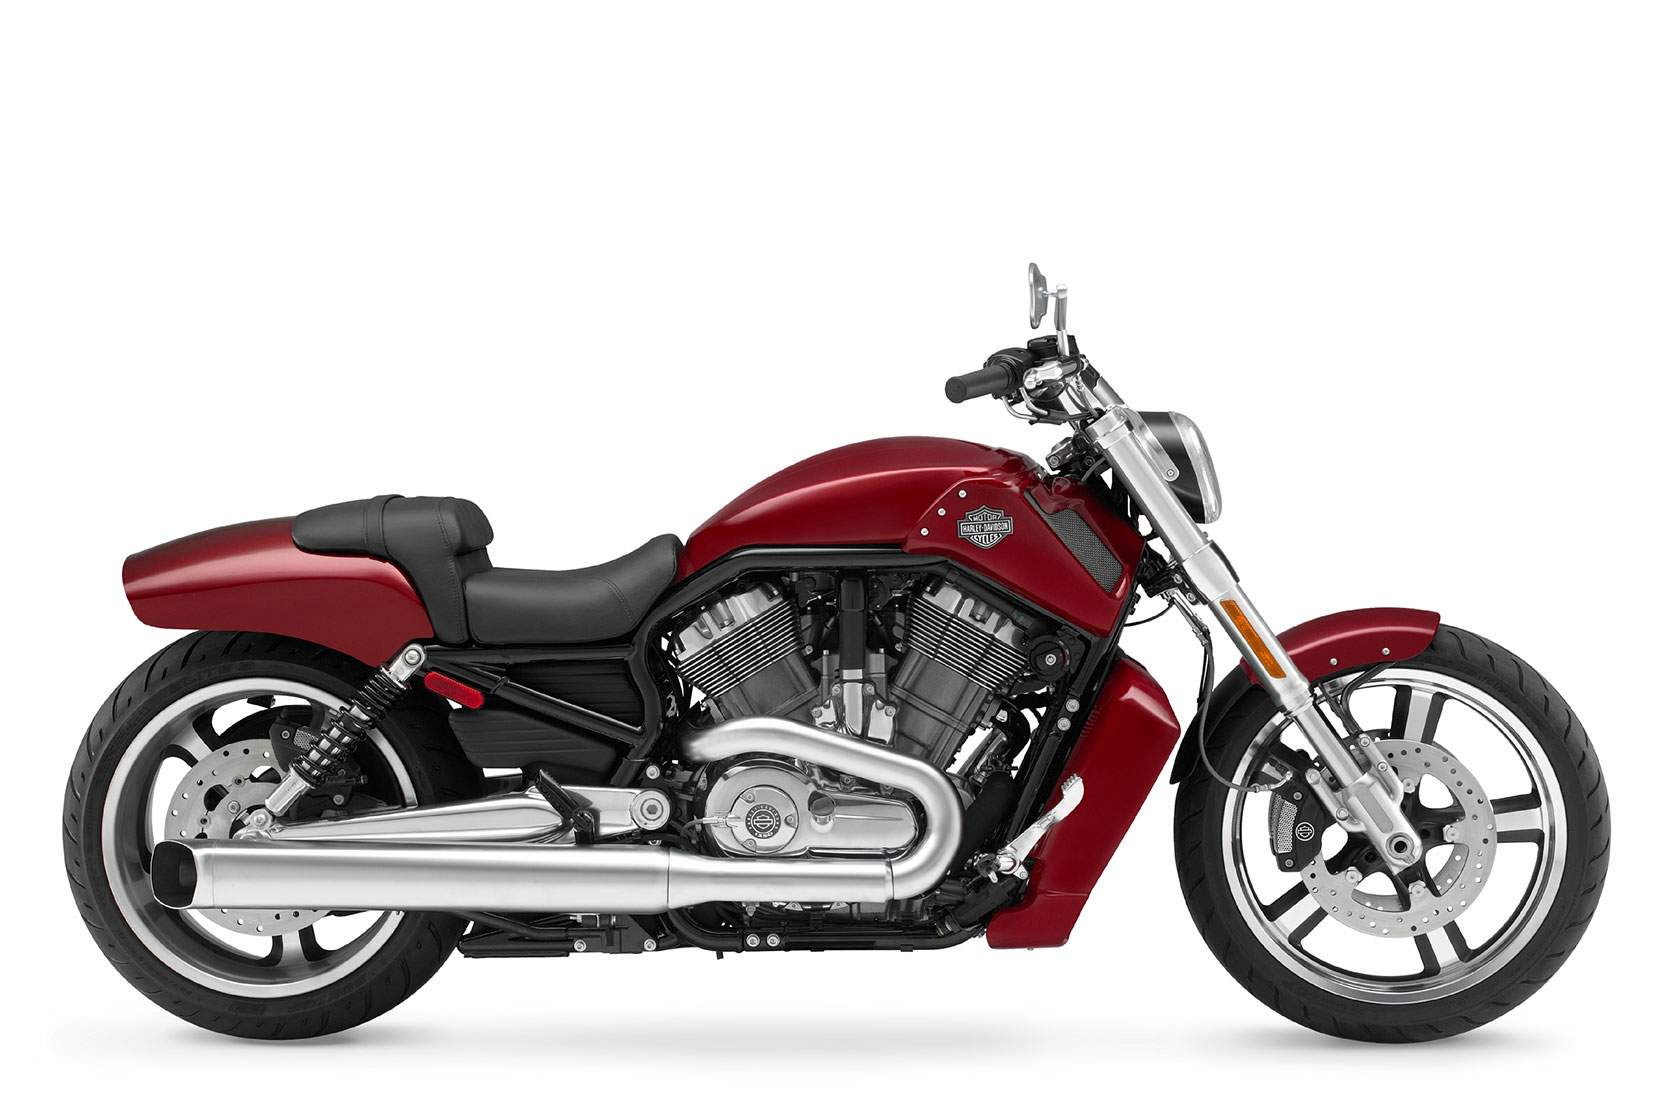 Harley Davidson VRSCF V-Rod Muscle For Sale Specifications, Price and Images